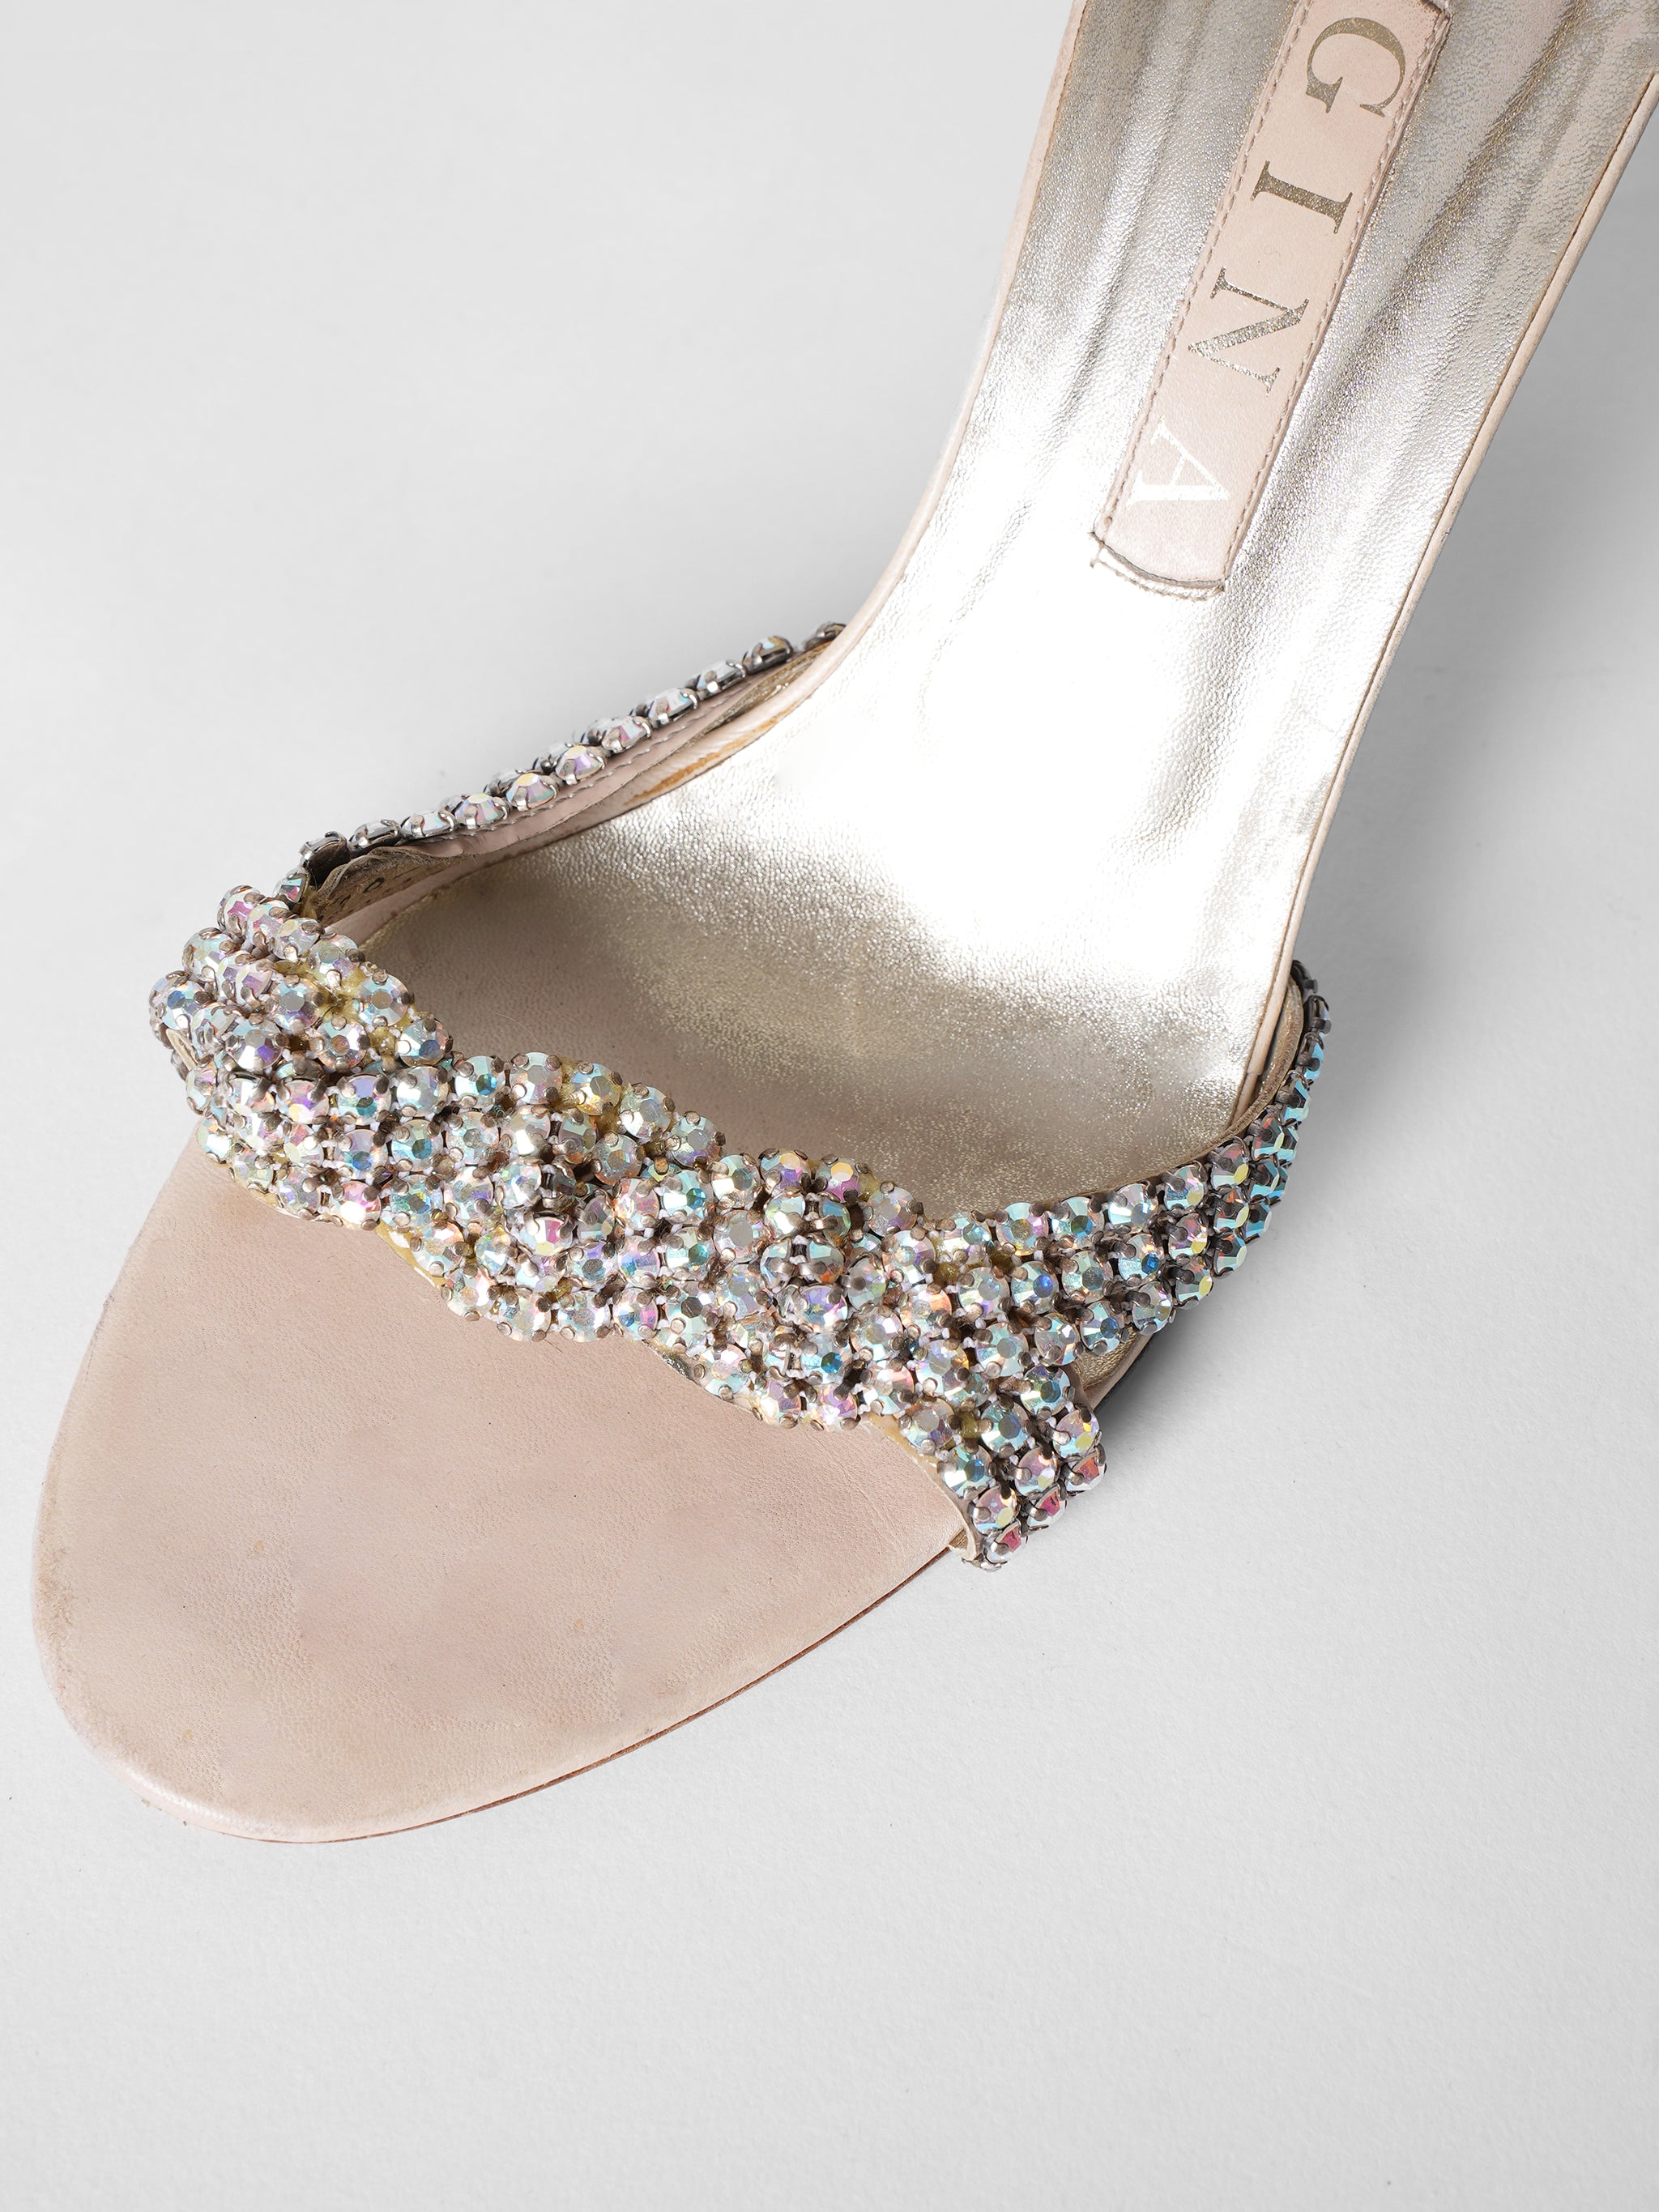 2023Women's sexy black high heel sandals Rhinestone pointed thin heel shoes  | eBay